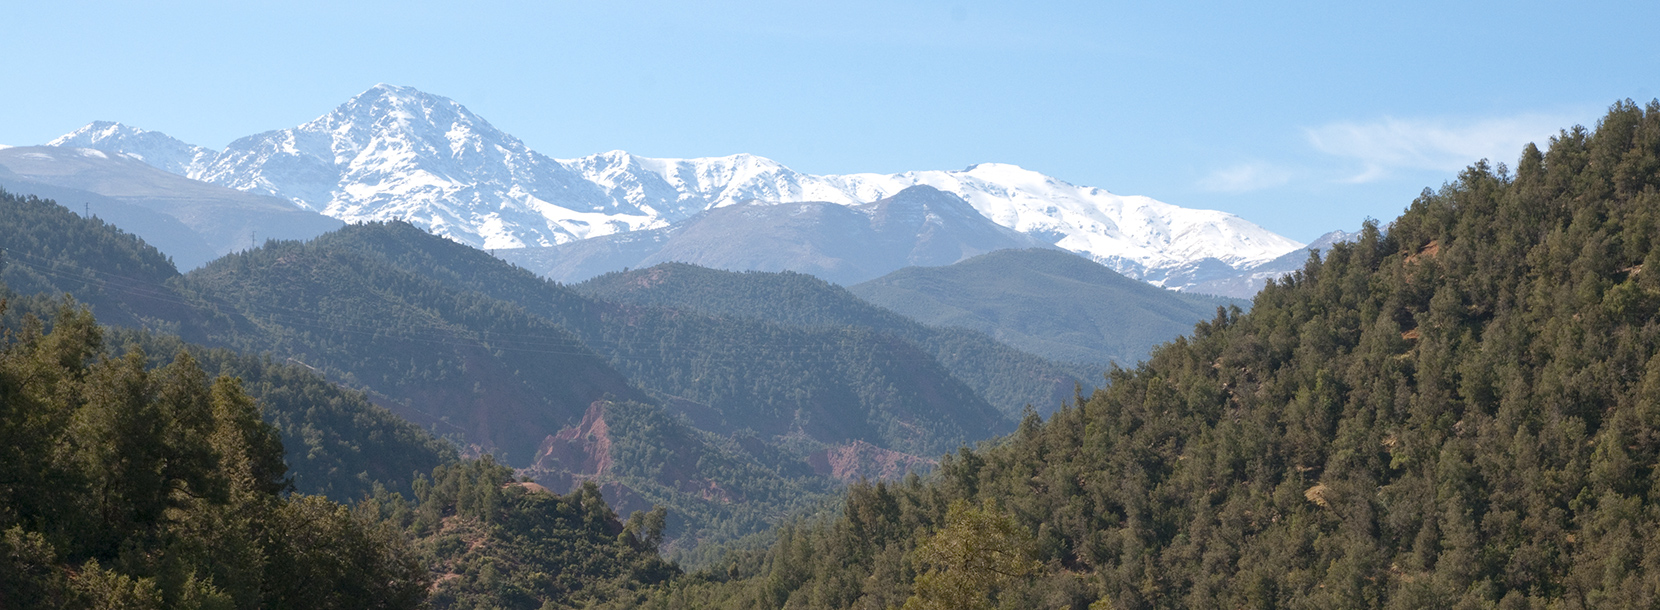 Das Atlas-Gebirge in Marrakesch